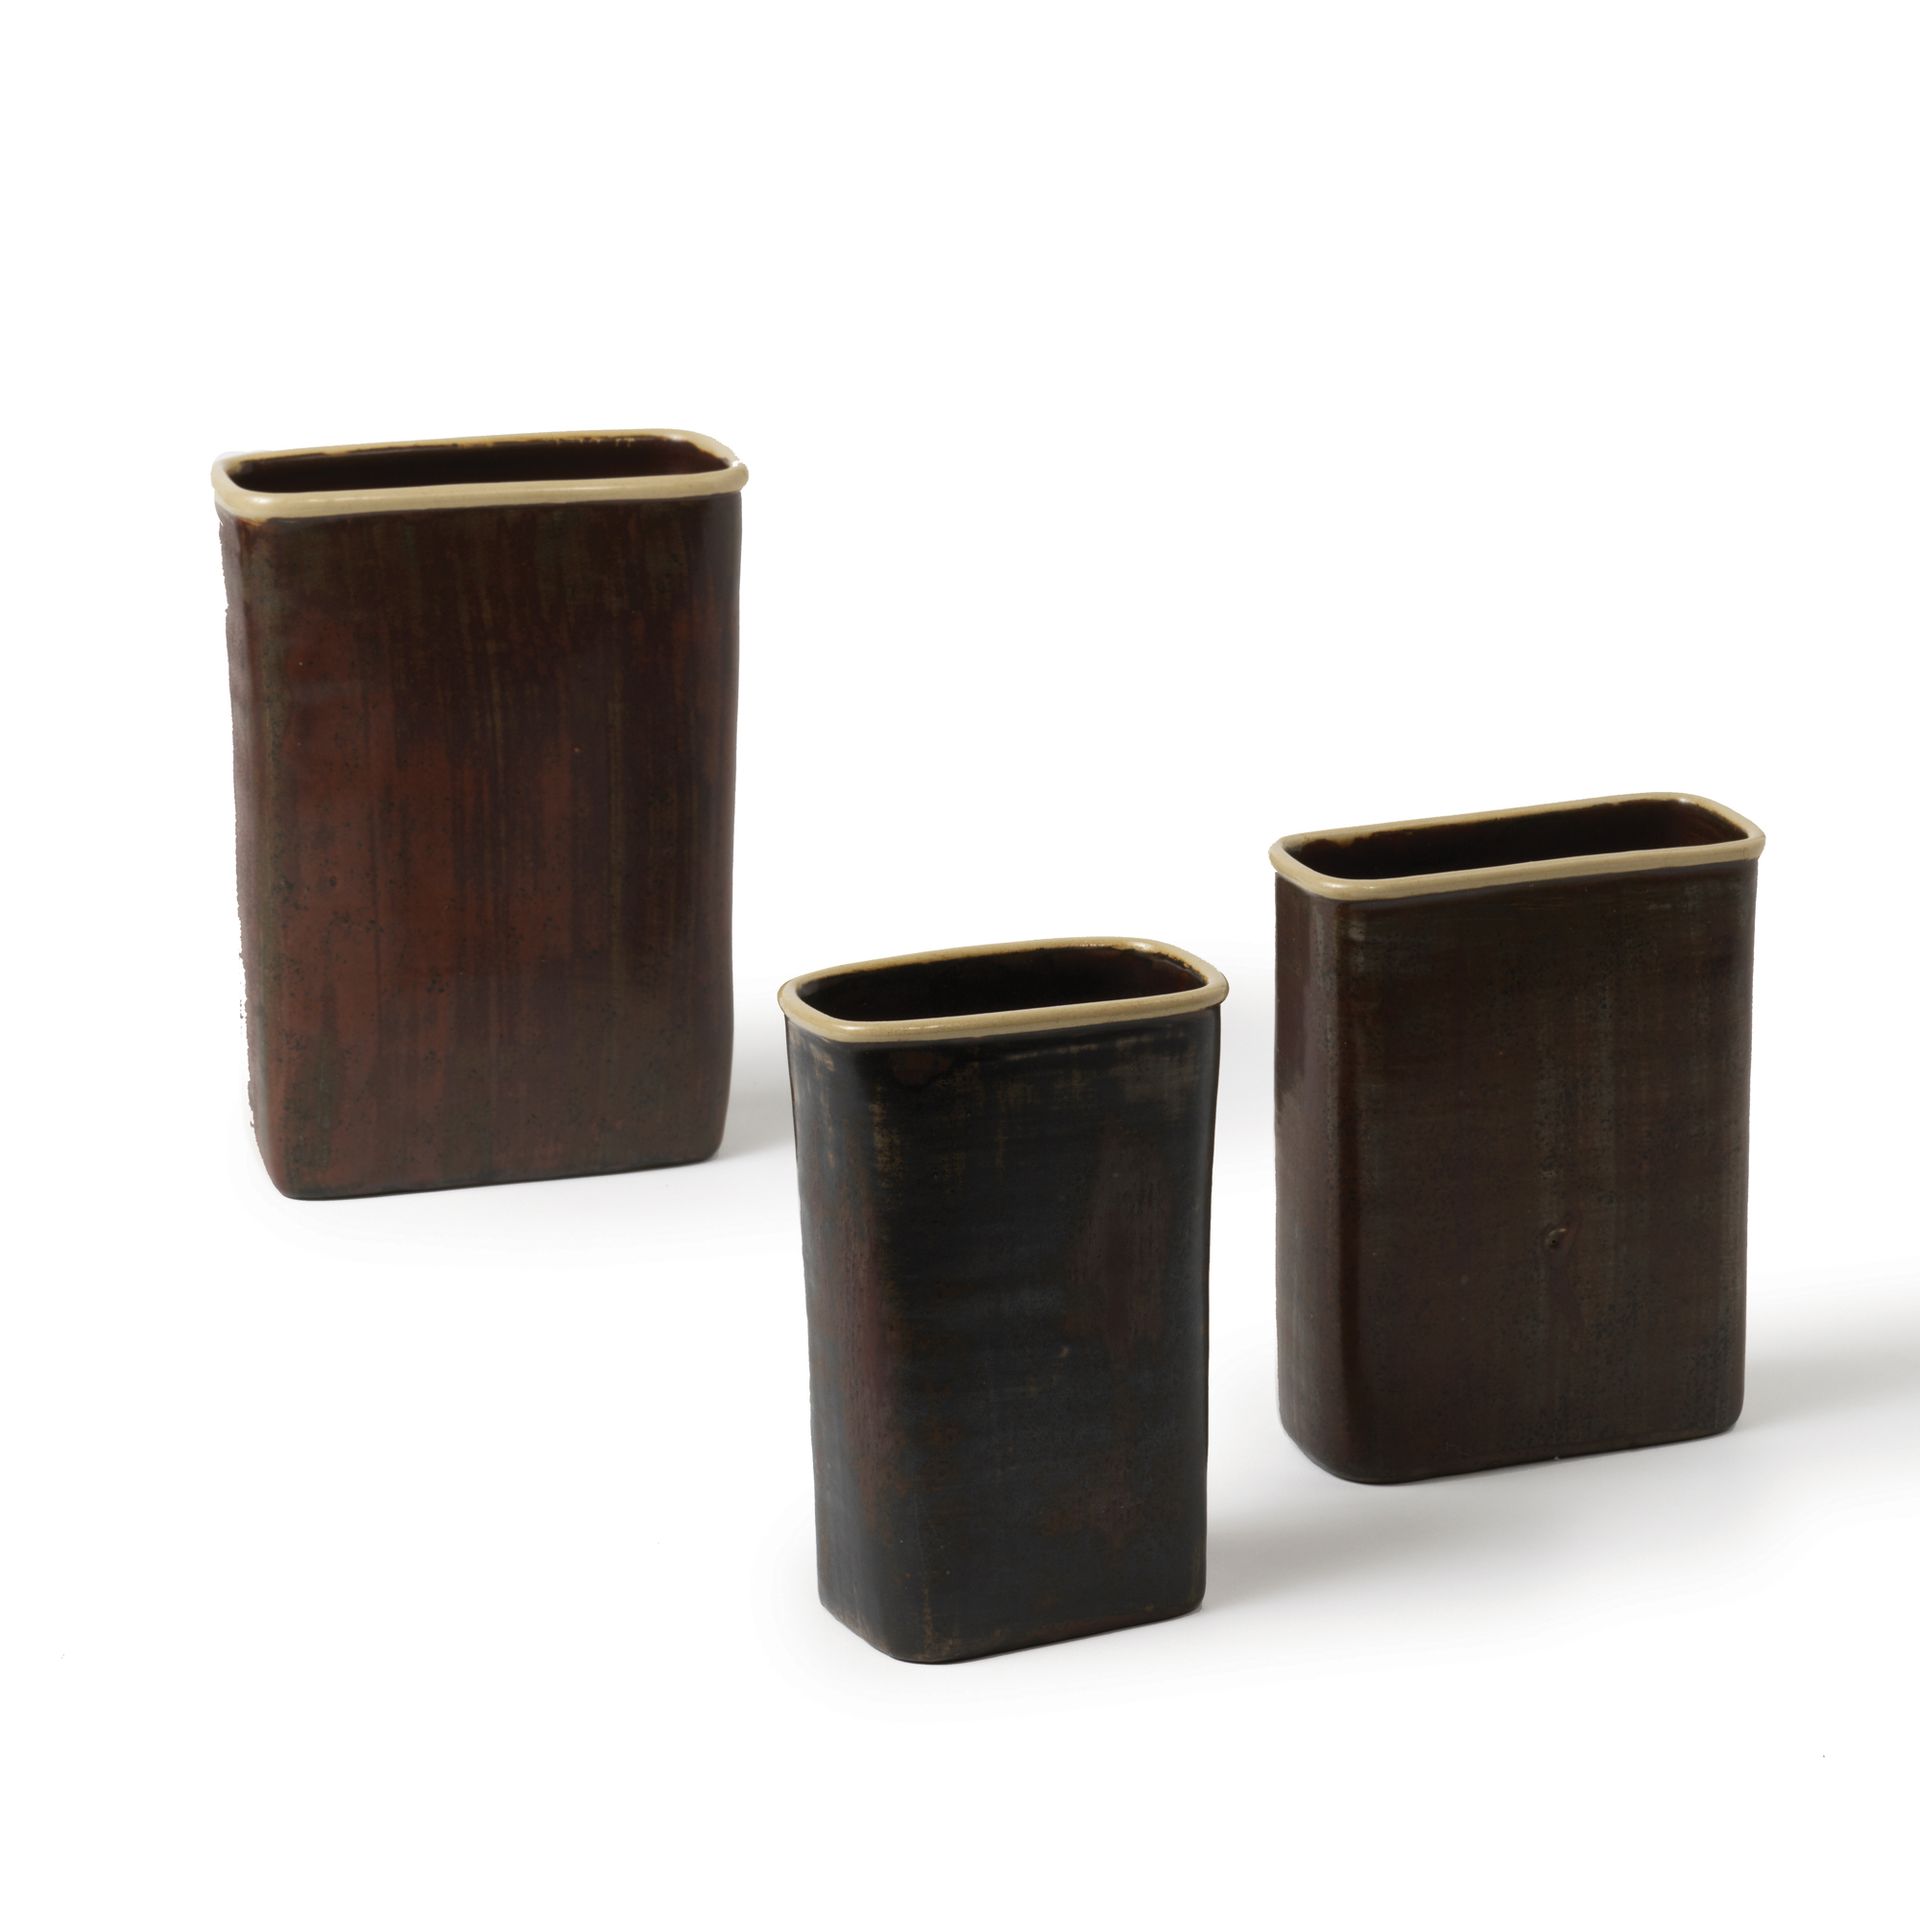 STIG LINDBERG (1916-1982) Lot de 3 vases, vers 1955
Émail brun
Manufacture de Gu&hellip;